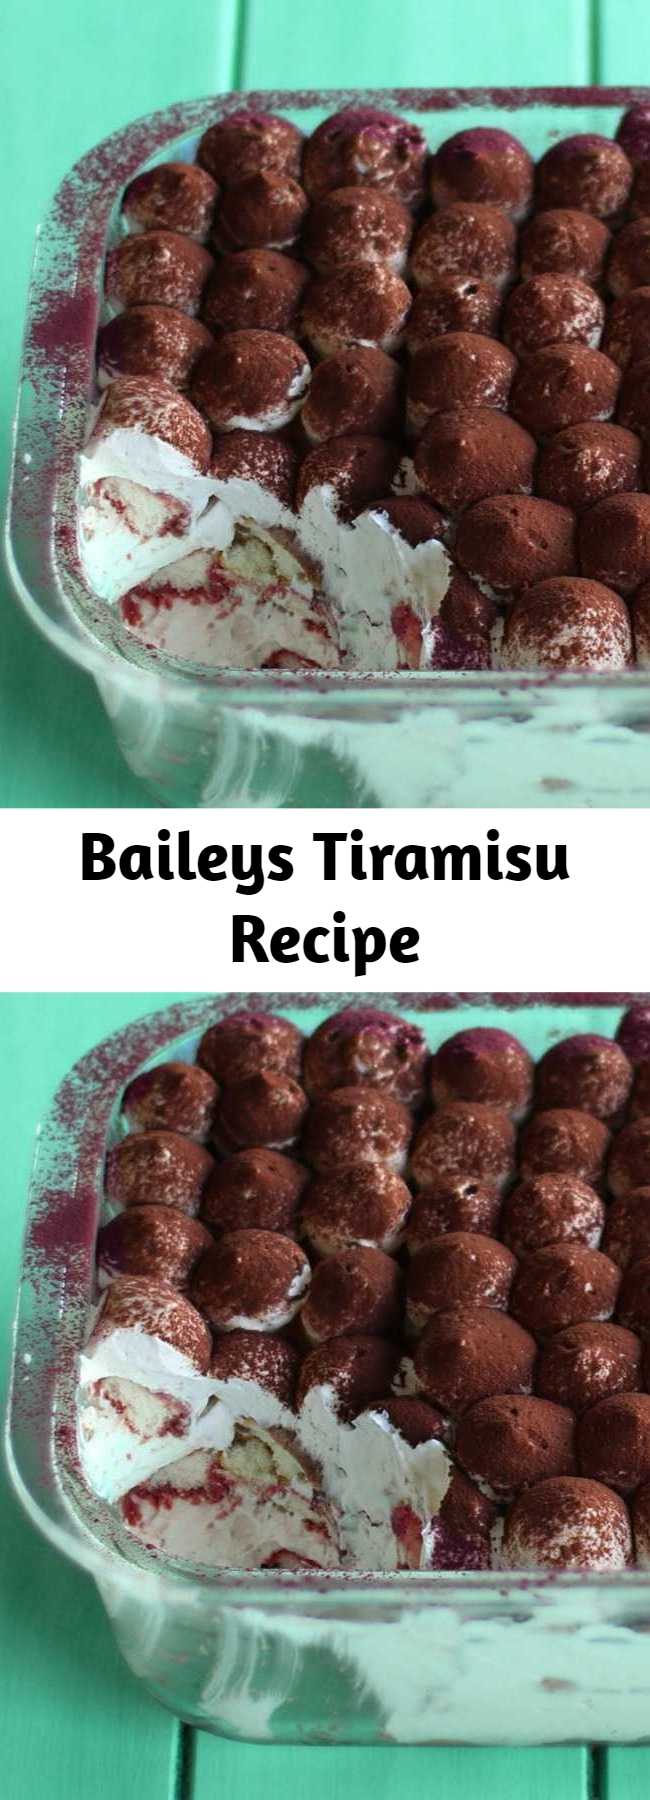 Baileys Tiramisu Recipe - This Baileys soaked tiramisu is the perfect weekend dessert to share with friends!